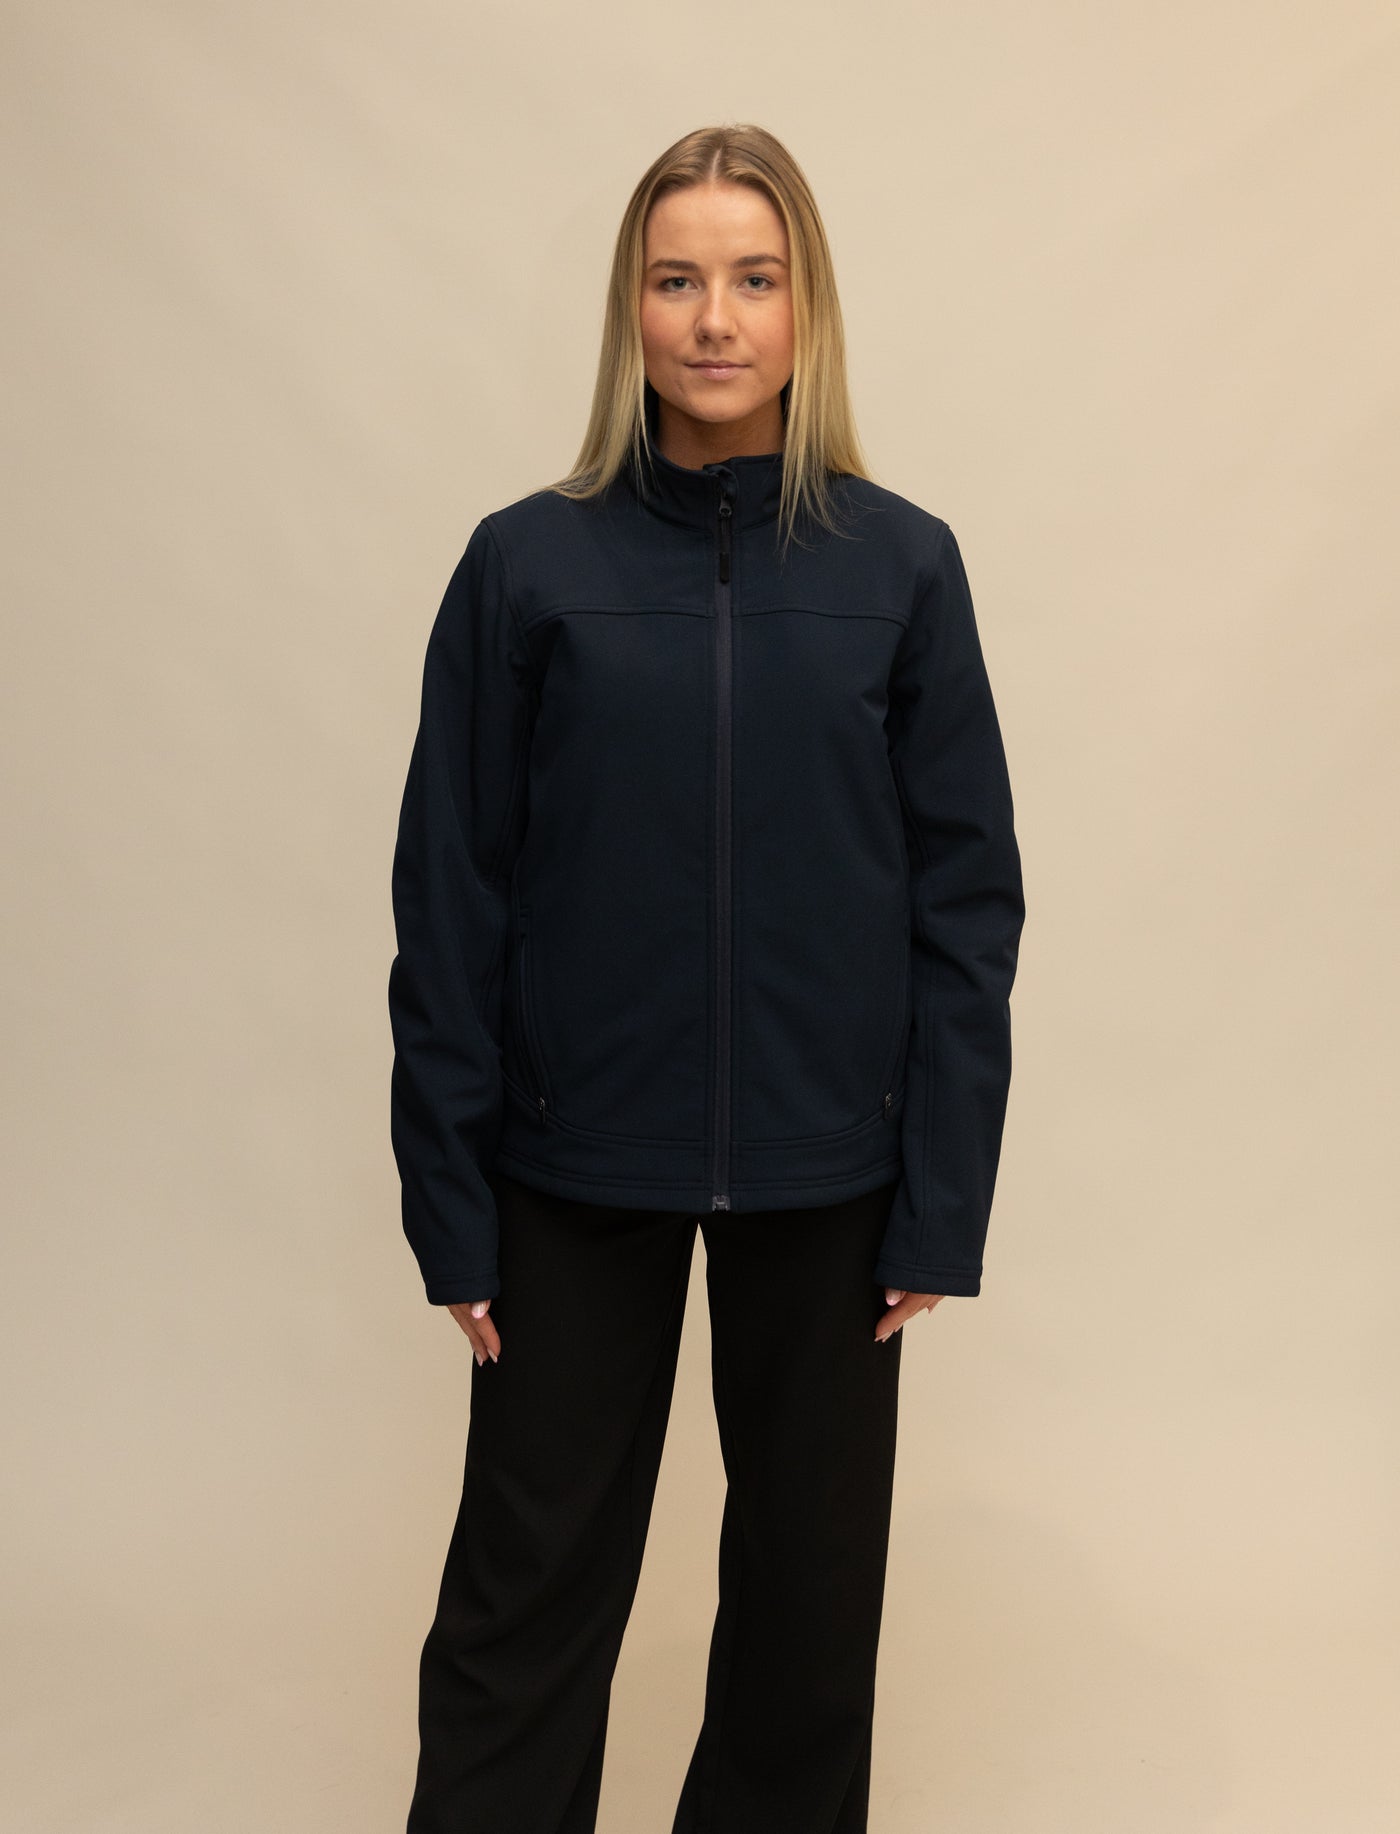 Women's Soft Shell Jacket - Navy